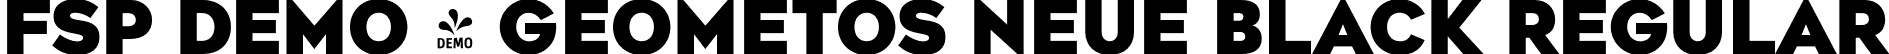 FSP DEMO - Geometos Neue Black Regular font - Fontspring-DEMO-geometos_neue_black.otf